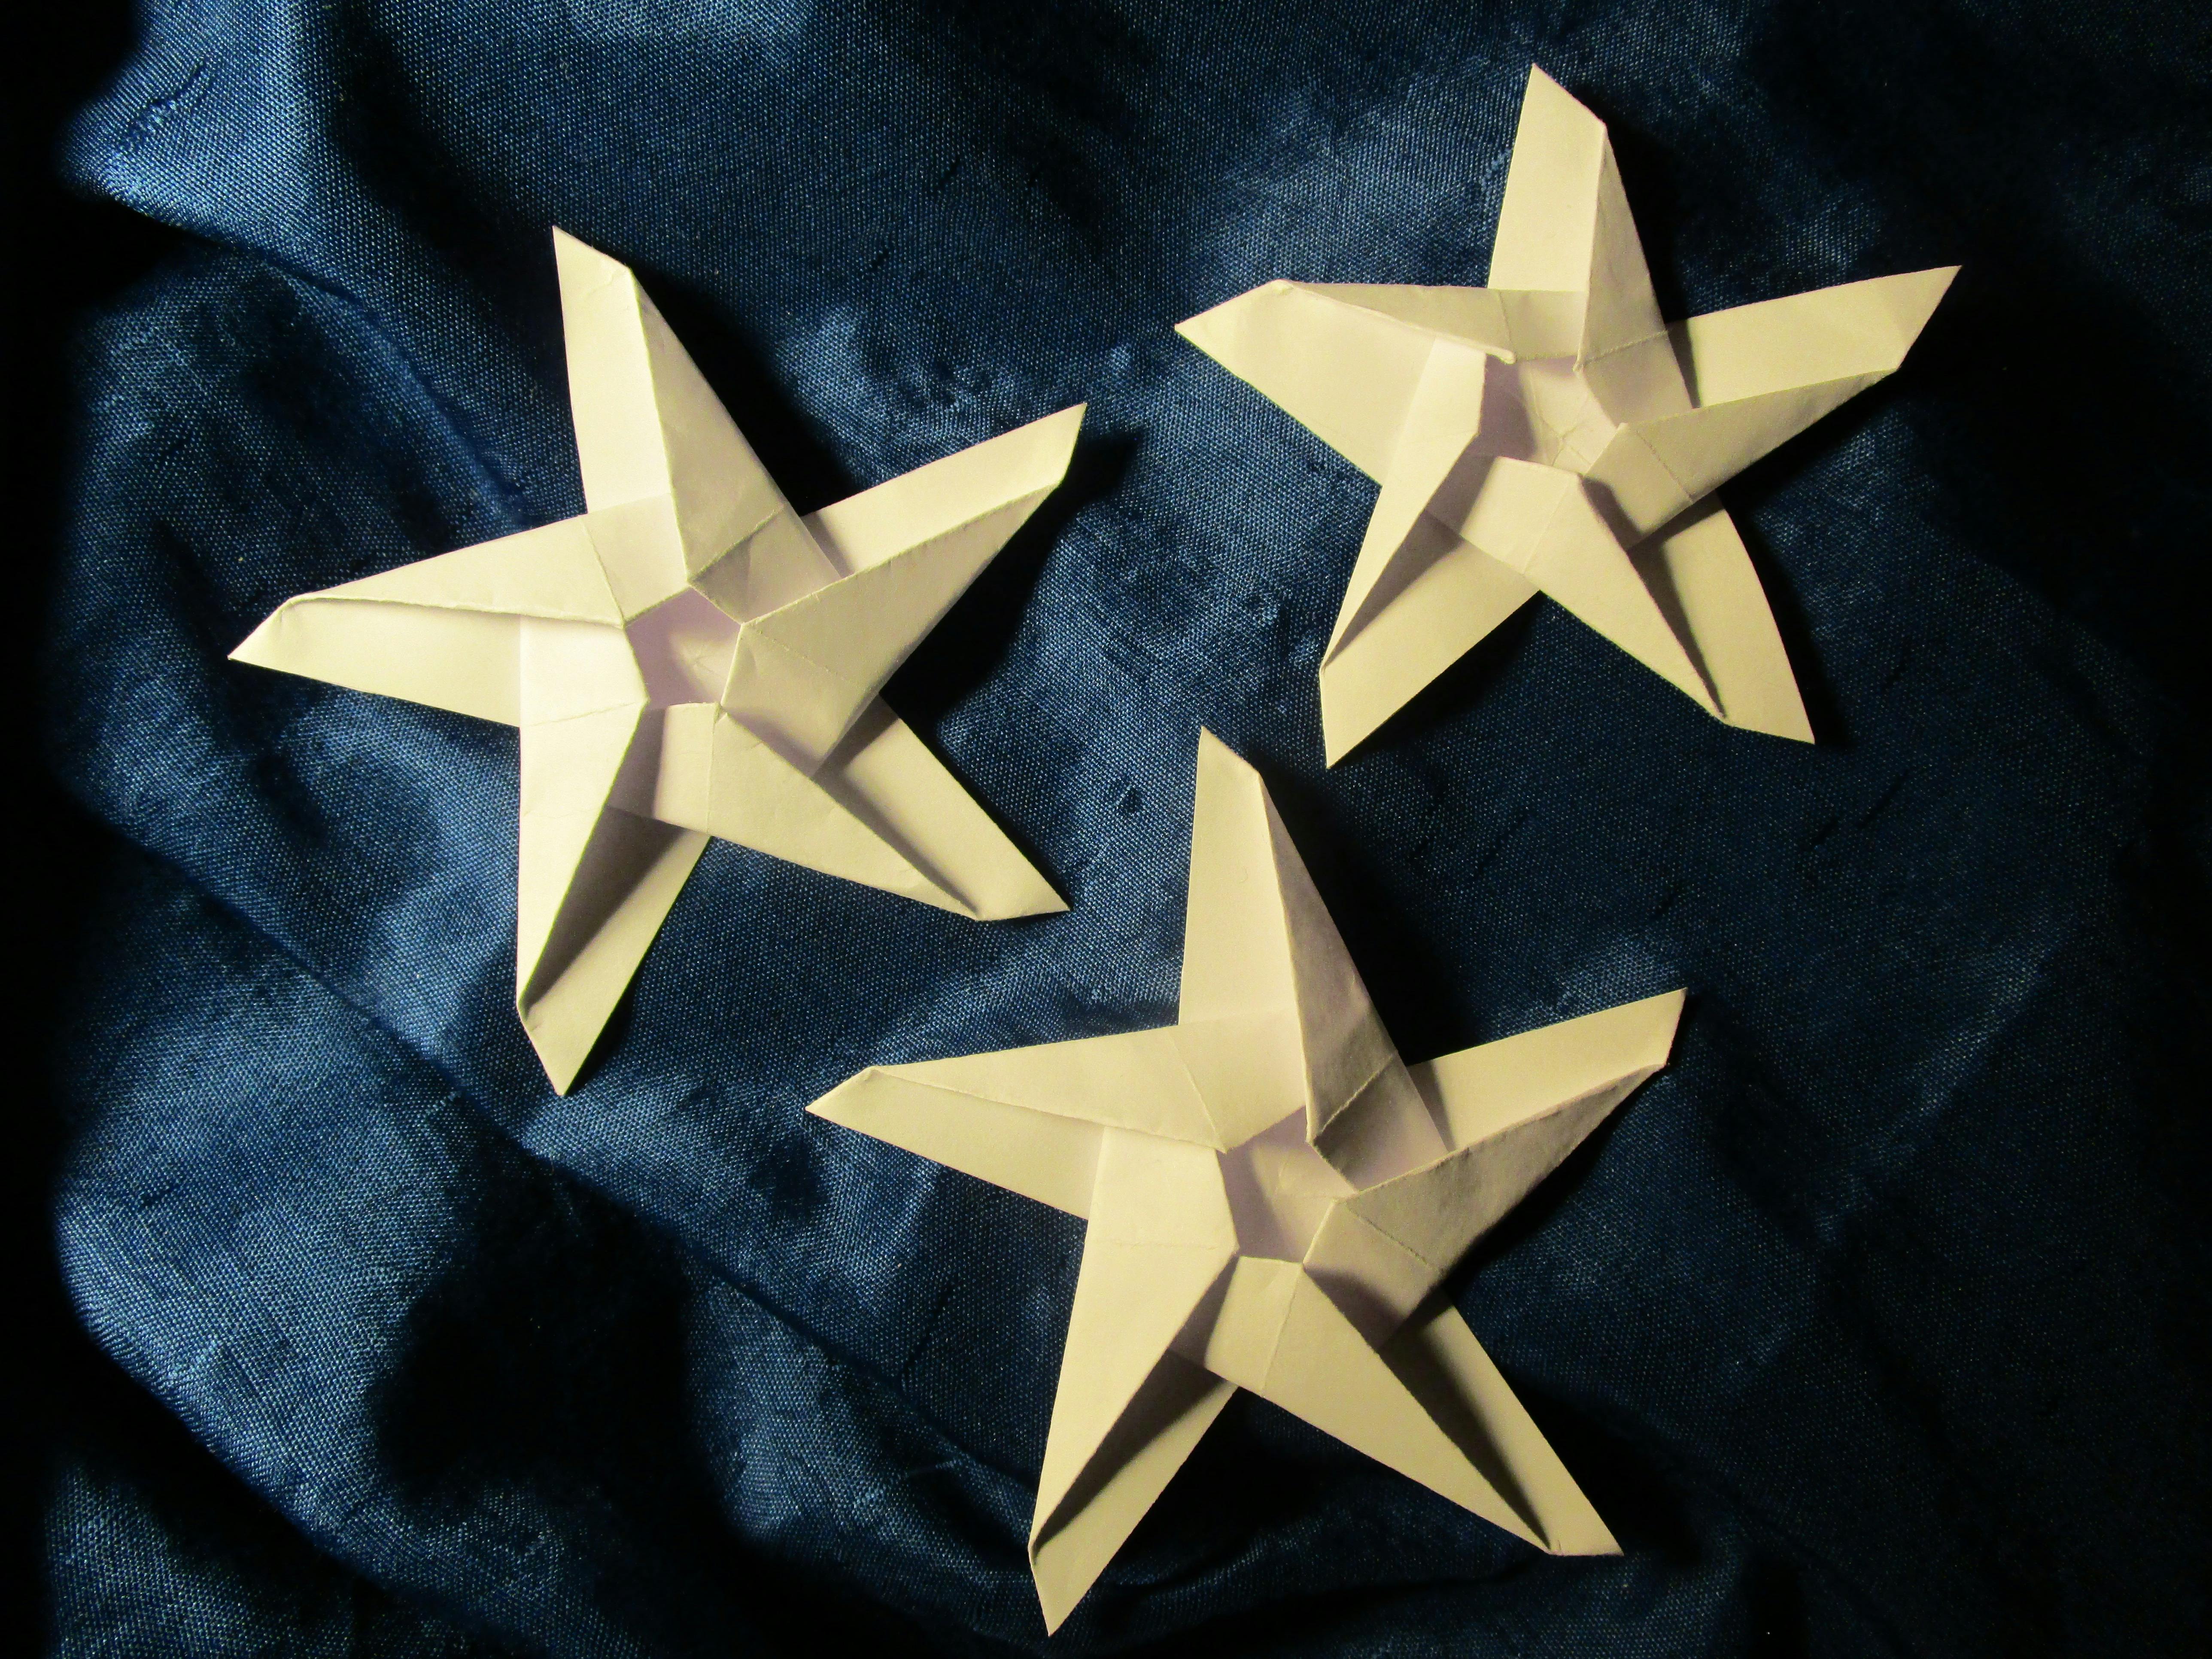 Free stock photo of stars paper origami paper blue art handmade